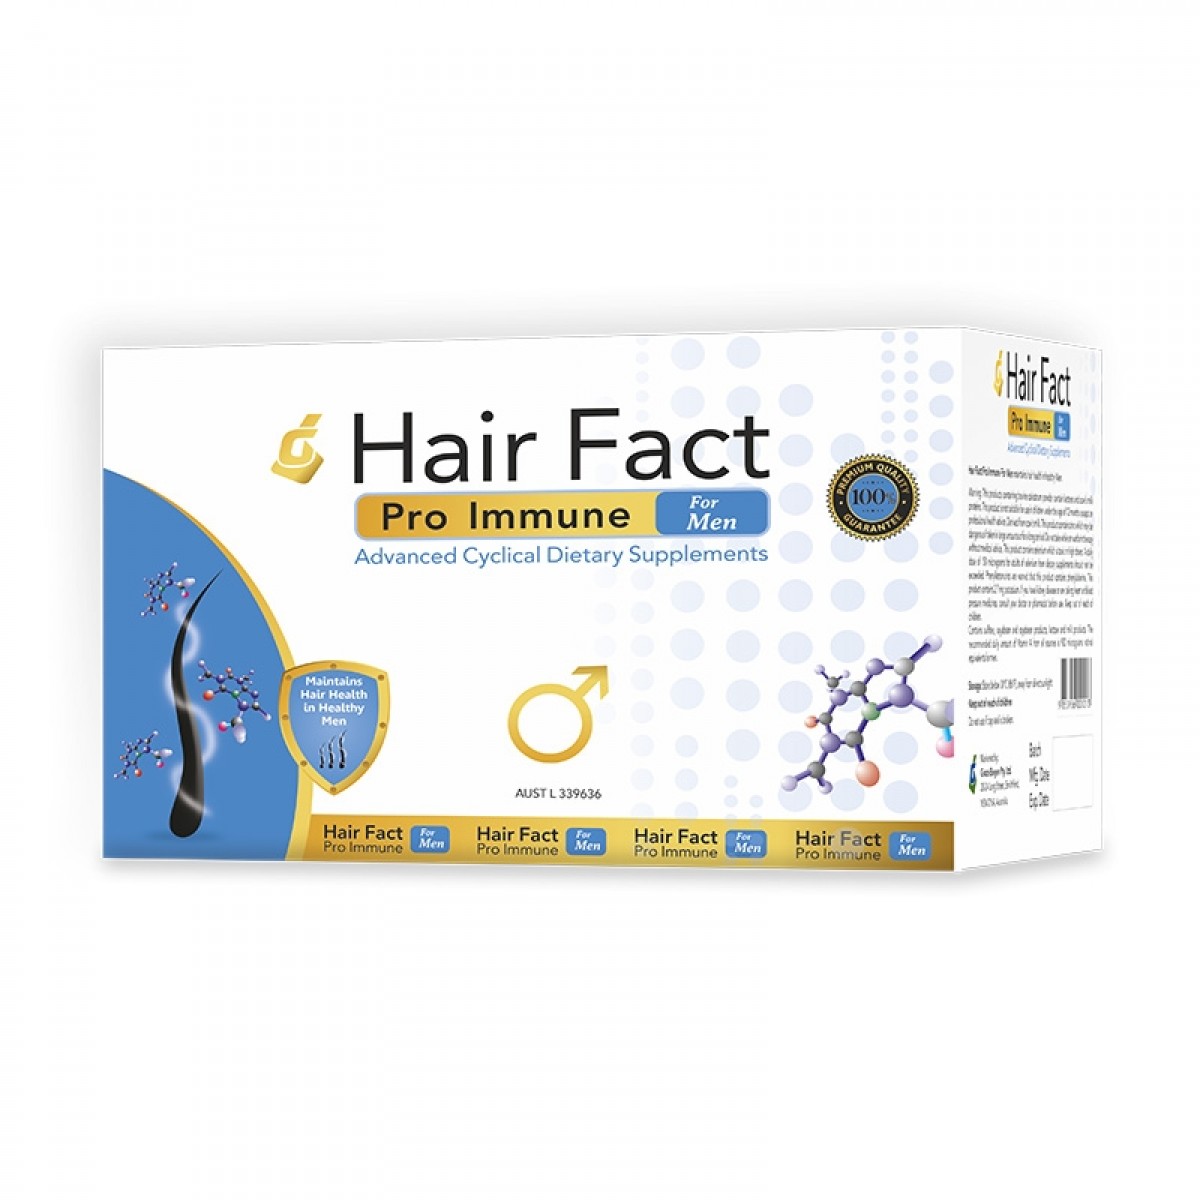 Hair Fact Pro Immune Kit for Men - 4 Month Kit - Hair Formulation - Products